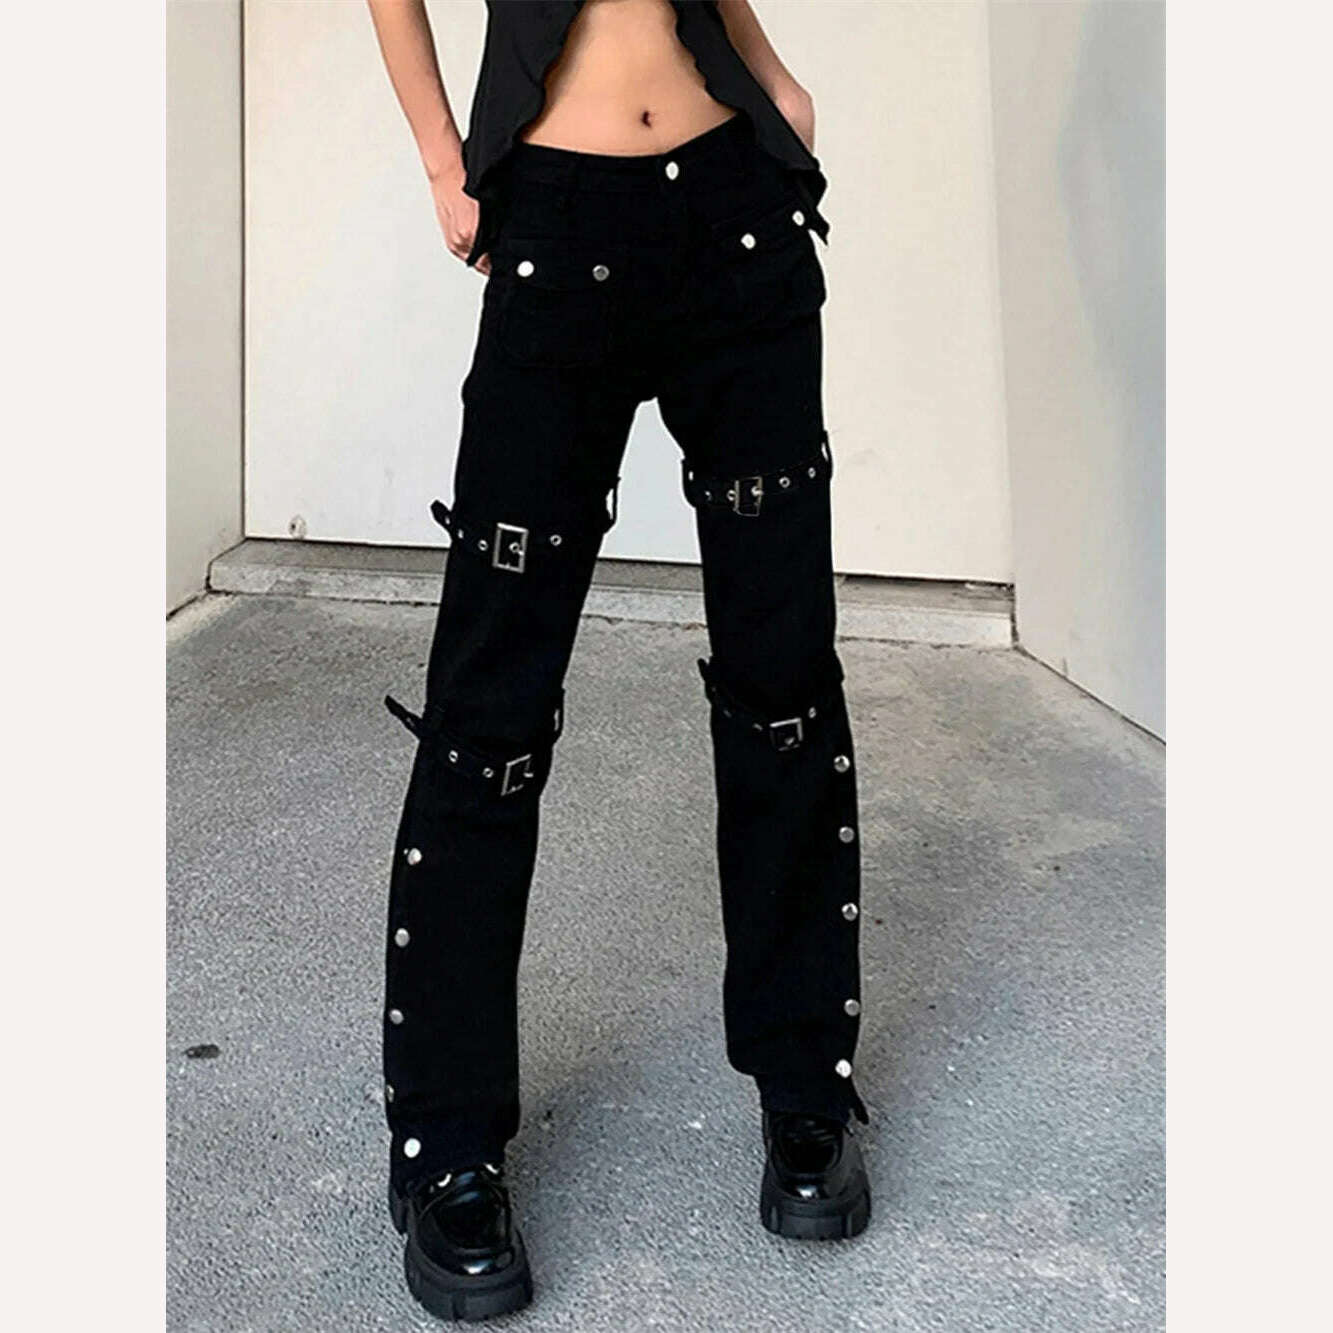 KIMLUD, Gothic Bandage Women Baggy Jeans Punk Style Egirl Black Denim Trousers Y2K Dark Academia Hight Waist Streetwear Pants, new1 no belt / S, KIMLUD Womens Clothes